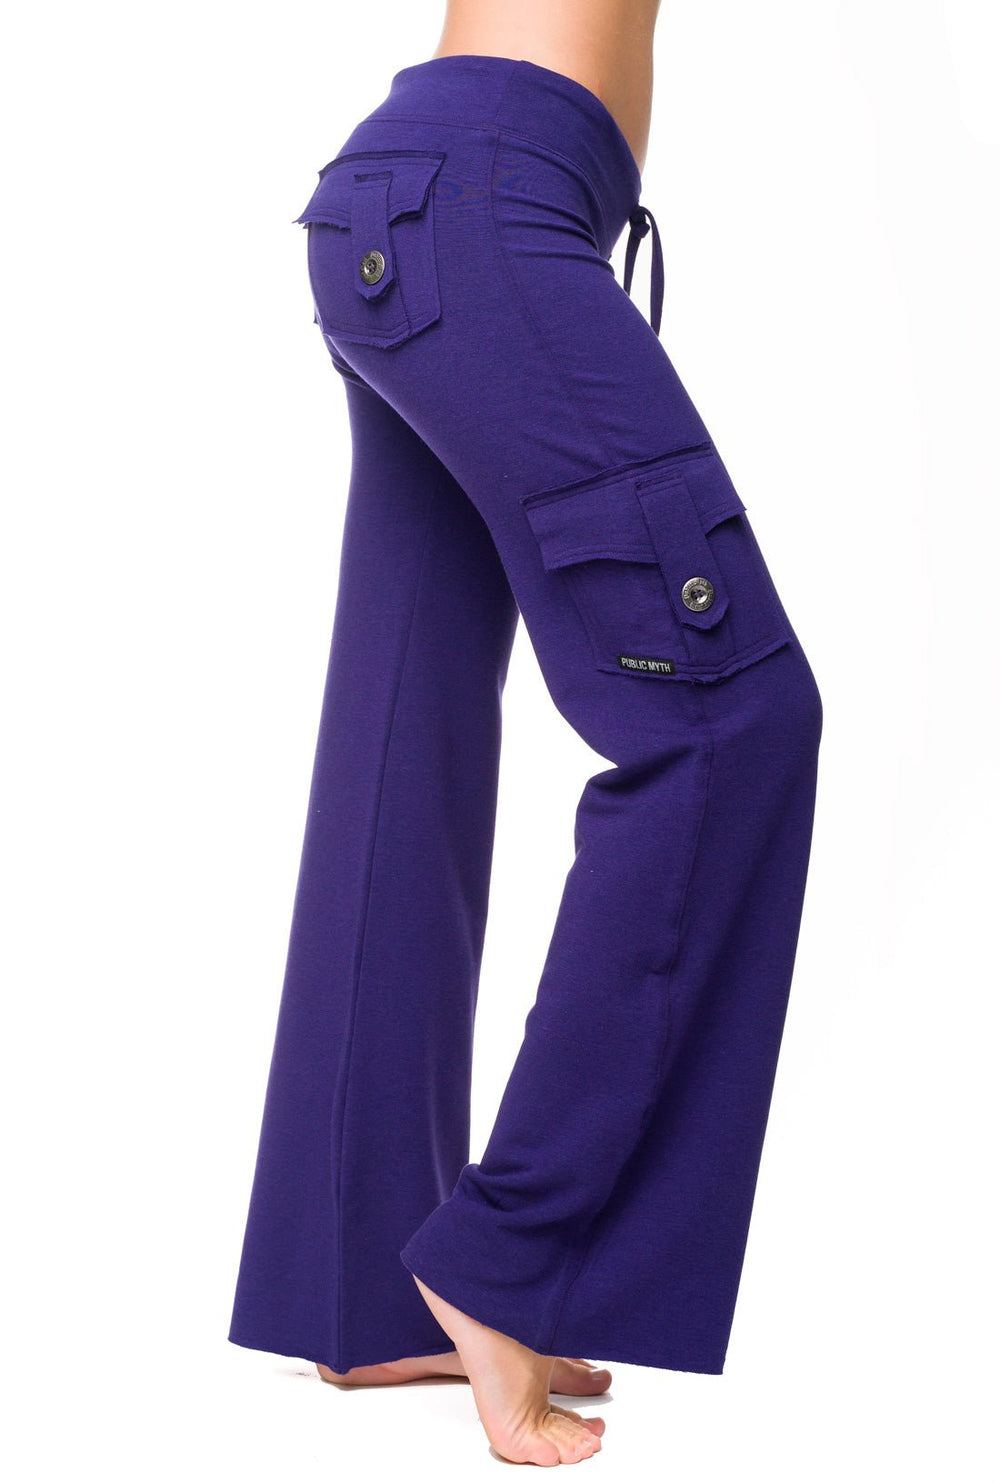 Buy Nite Flite Purple Cotton Mid Rise Yoga Pants for Women Online